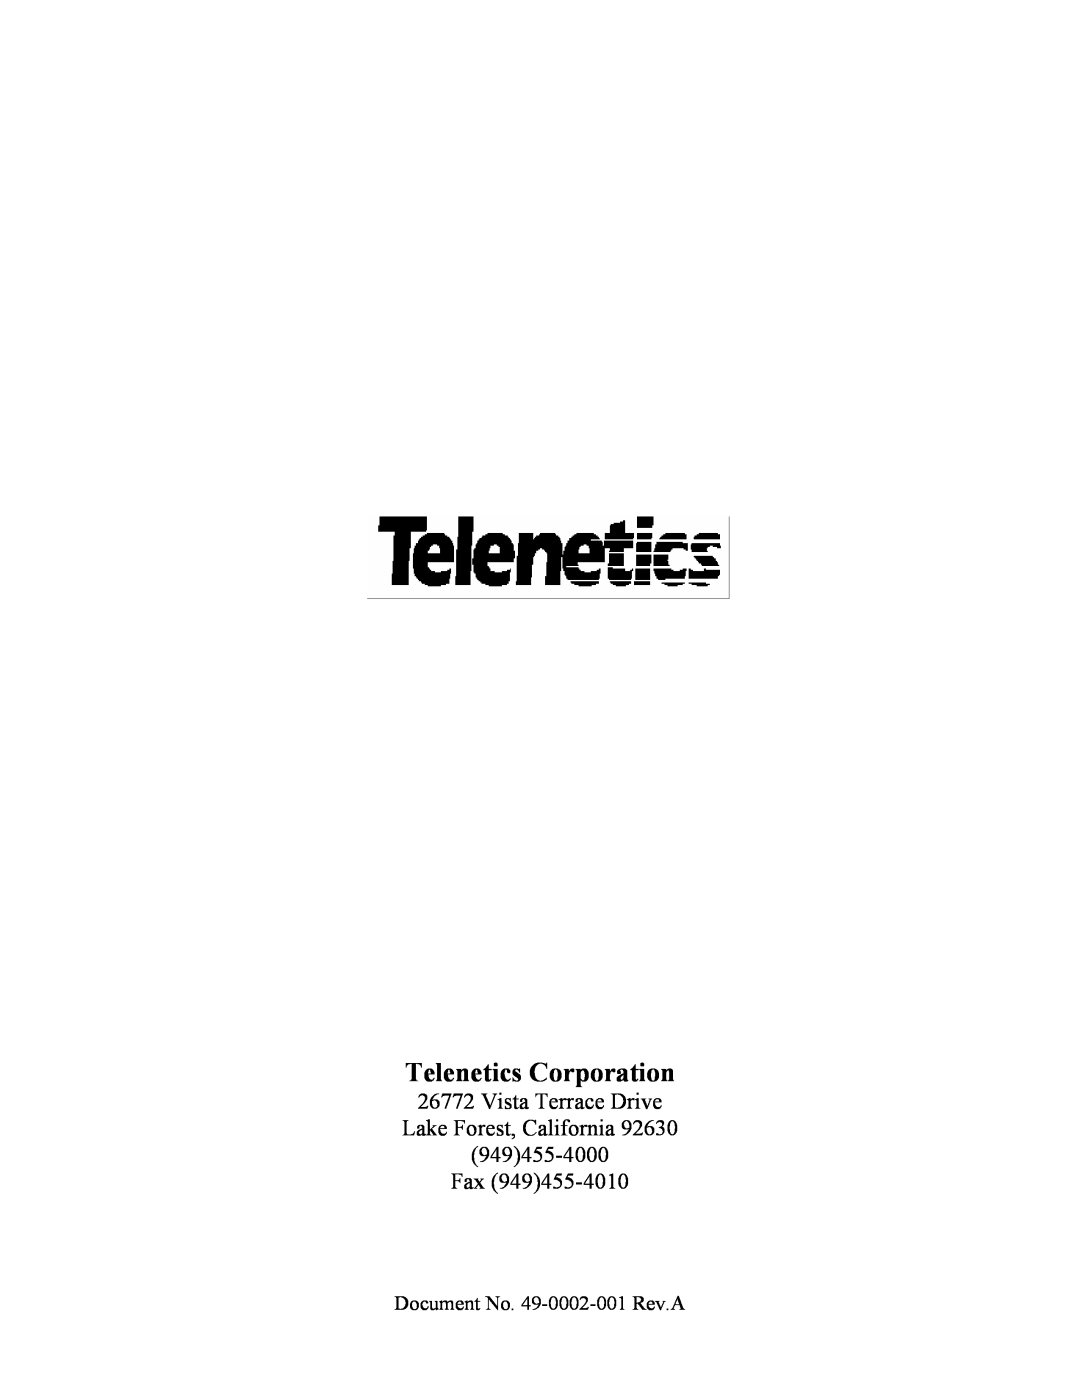 Telenetics MIU14.4, MIU9.6, MIU28.8 Telenetics Corporation, Vista Terrace Drive Lake Forest, California 949455-4000 Fax 